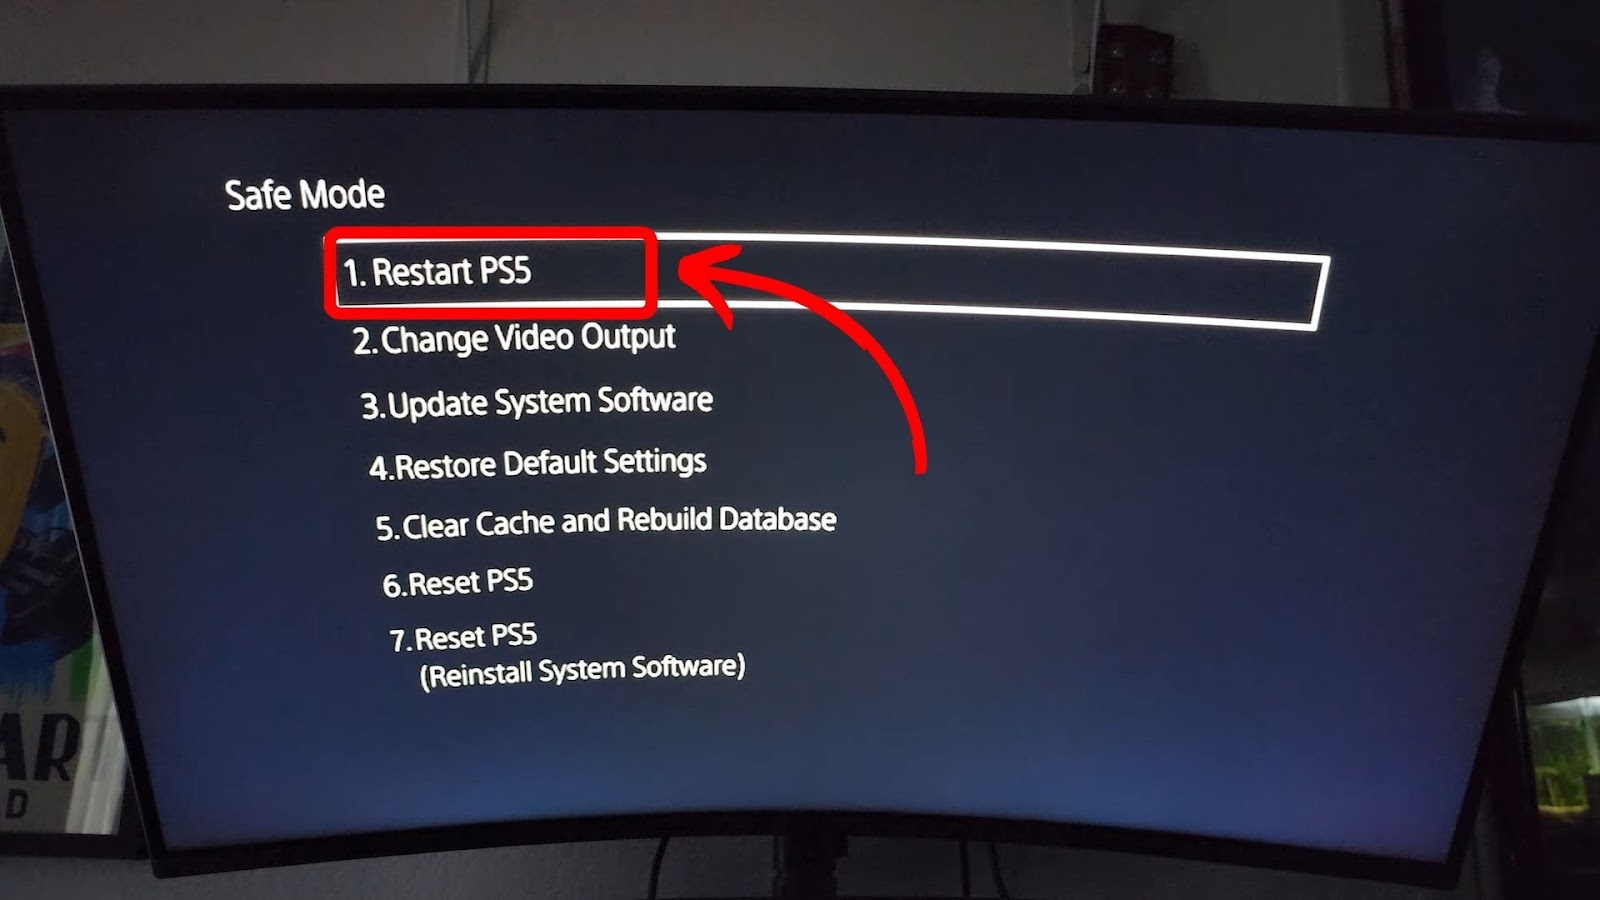 Restart PS5 in Safe Mode